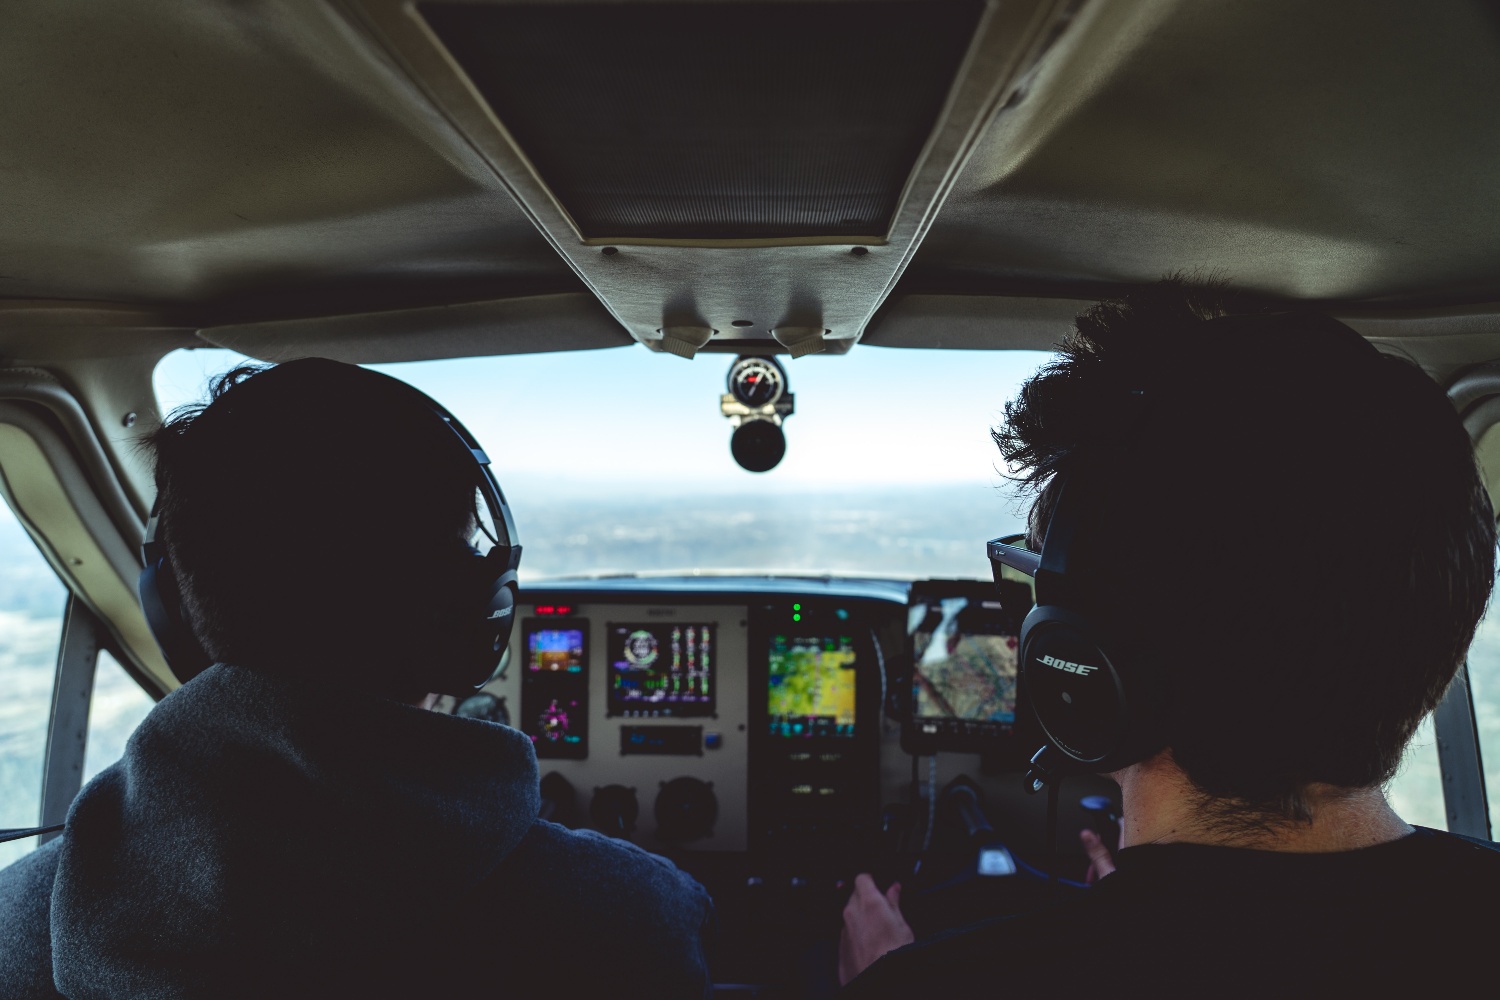 CFI and Student Pilot Training